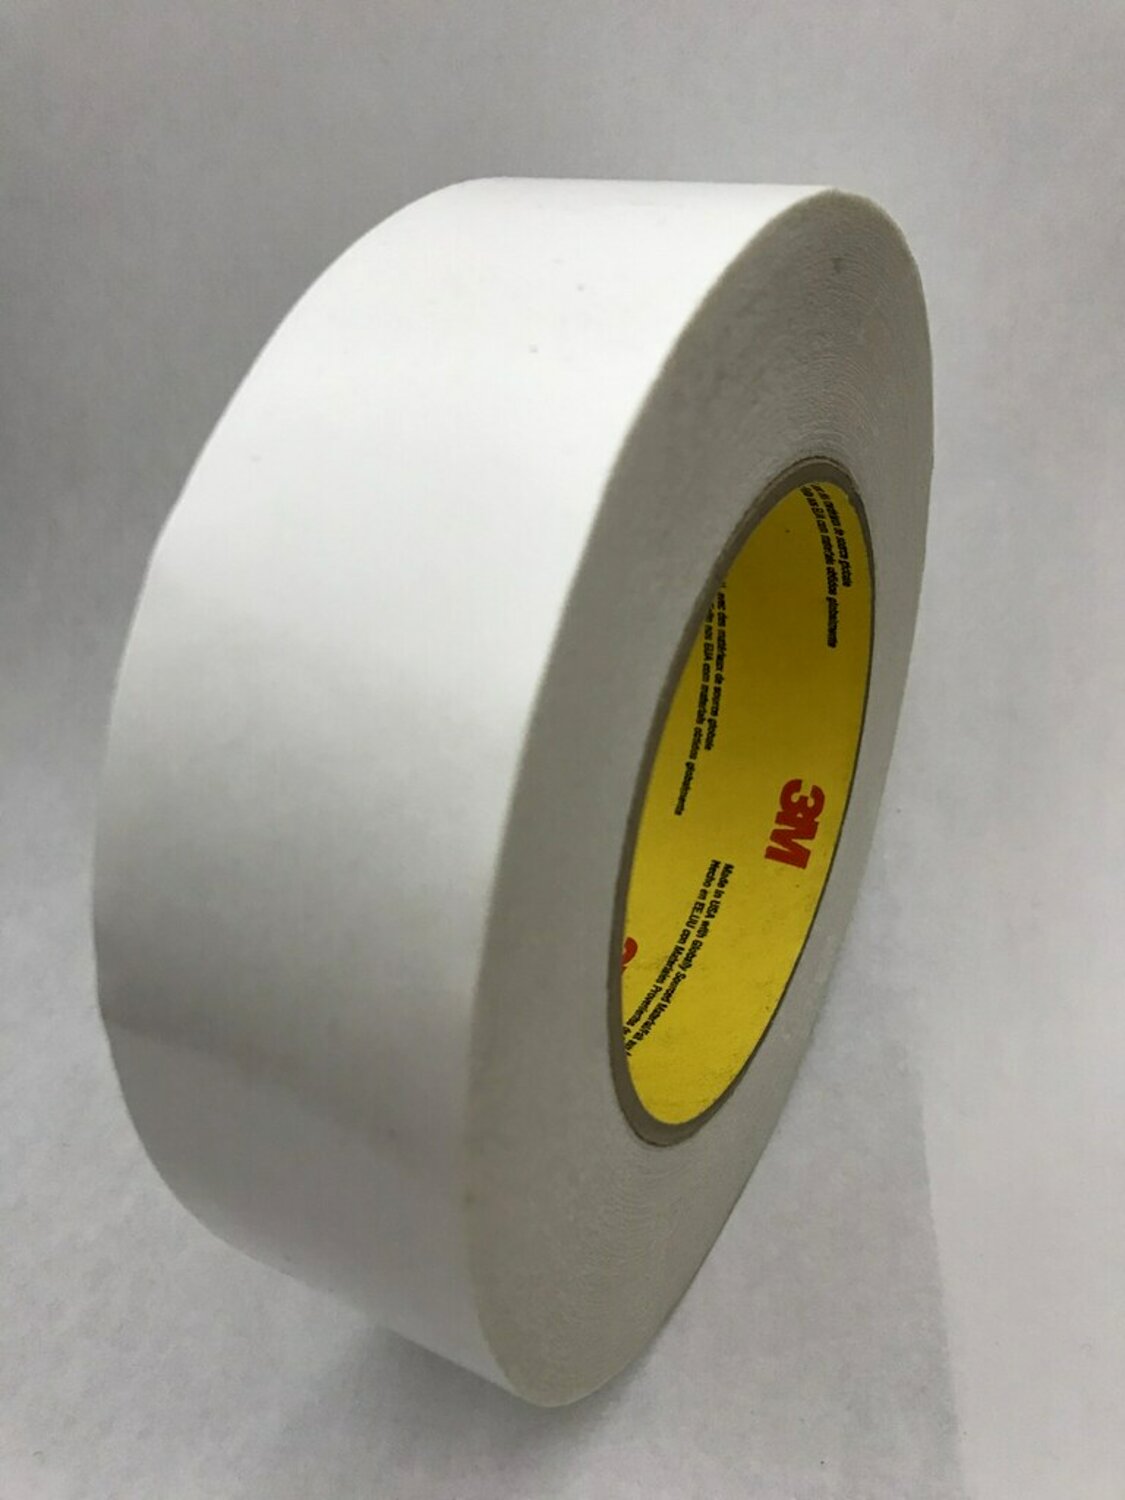 7100043854 - 3M Venture Tape Double Coated PET Tape 514CW, 1 1/2 in x 180 yd, 0.5
mil, 8 rolls per case